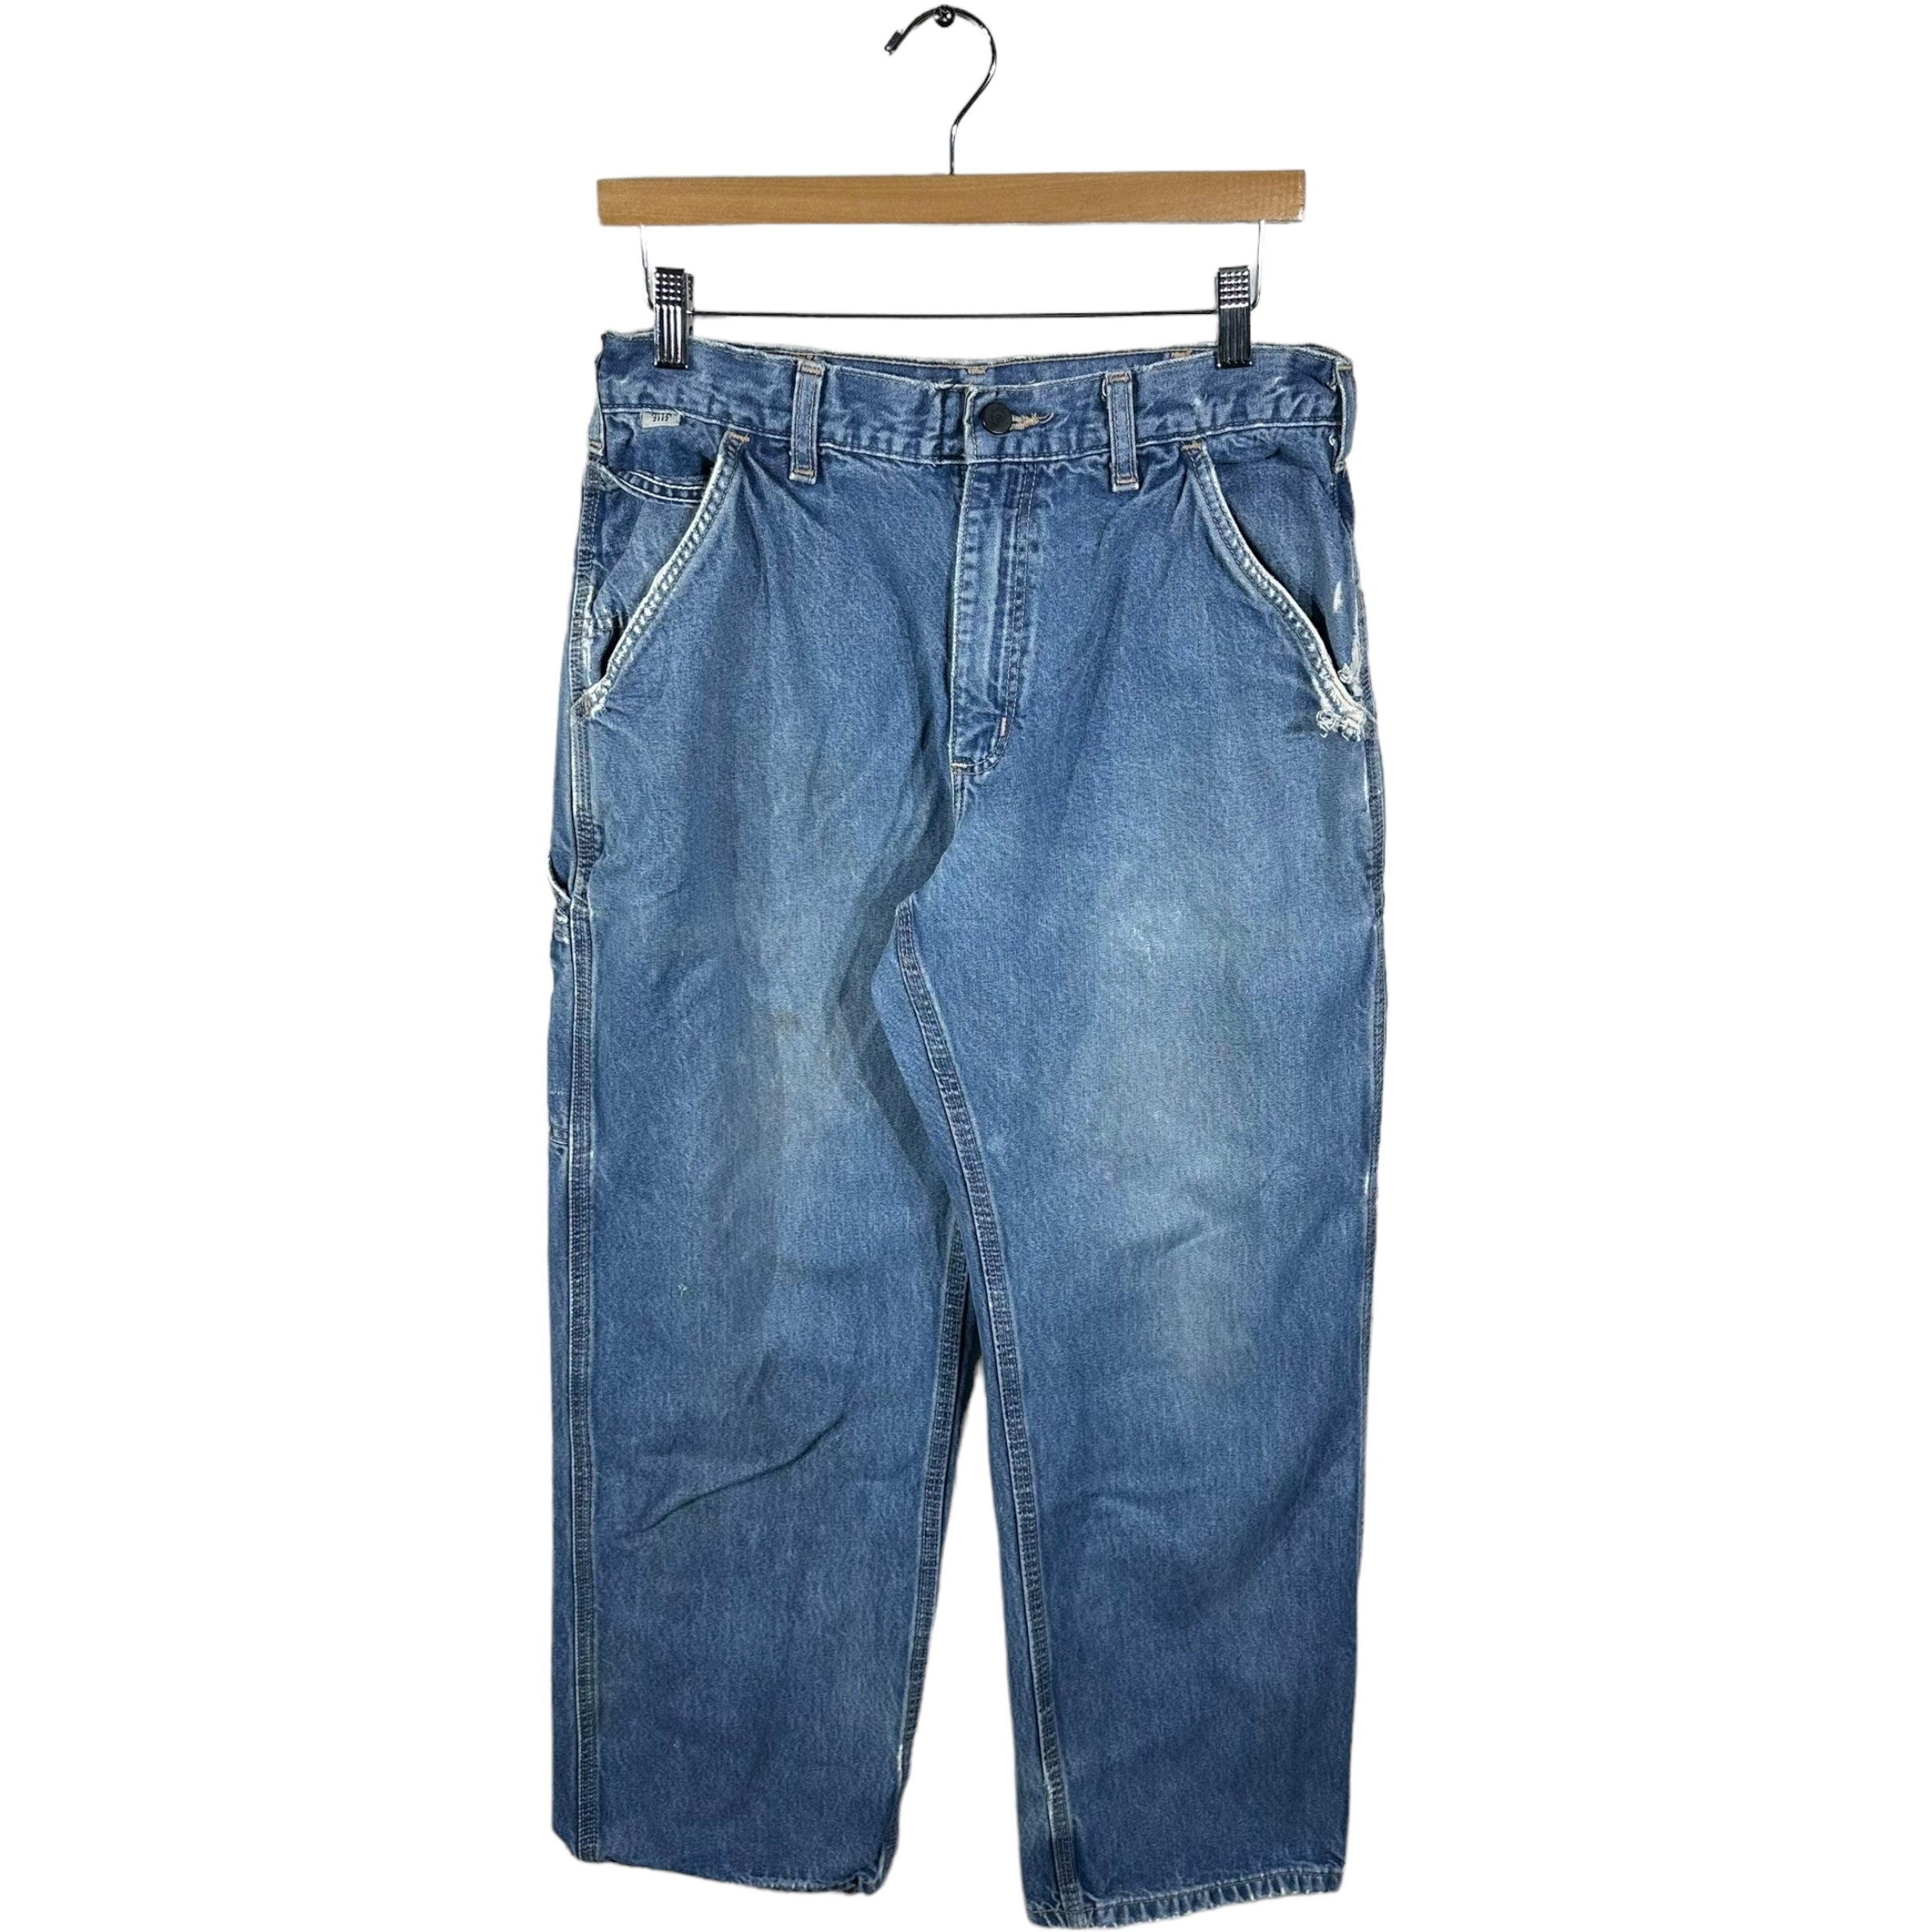 Vintage Carhartt Cargo Denim Jeans